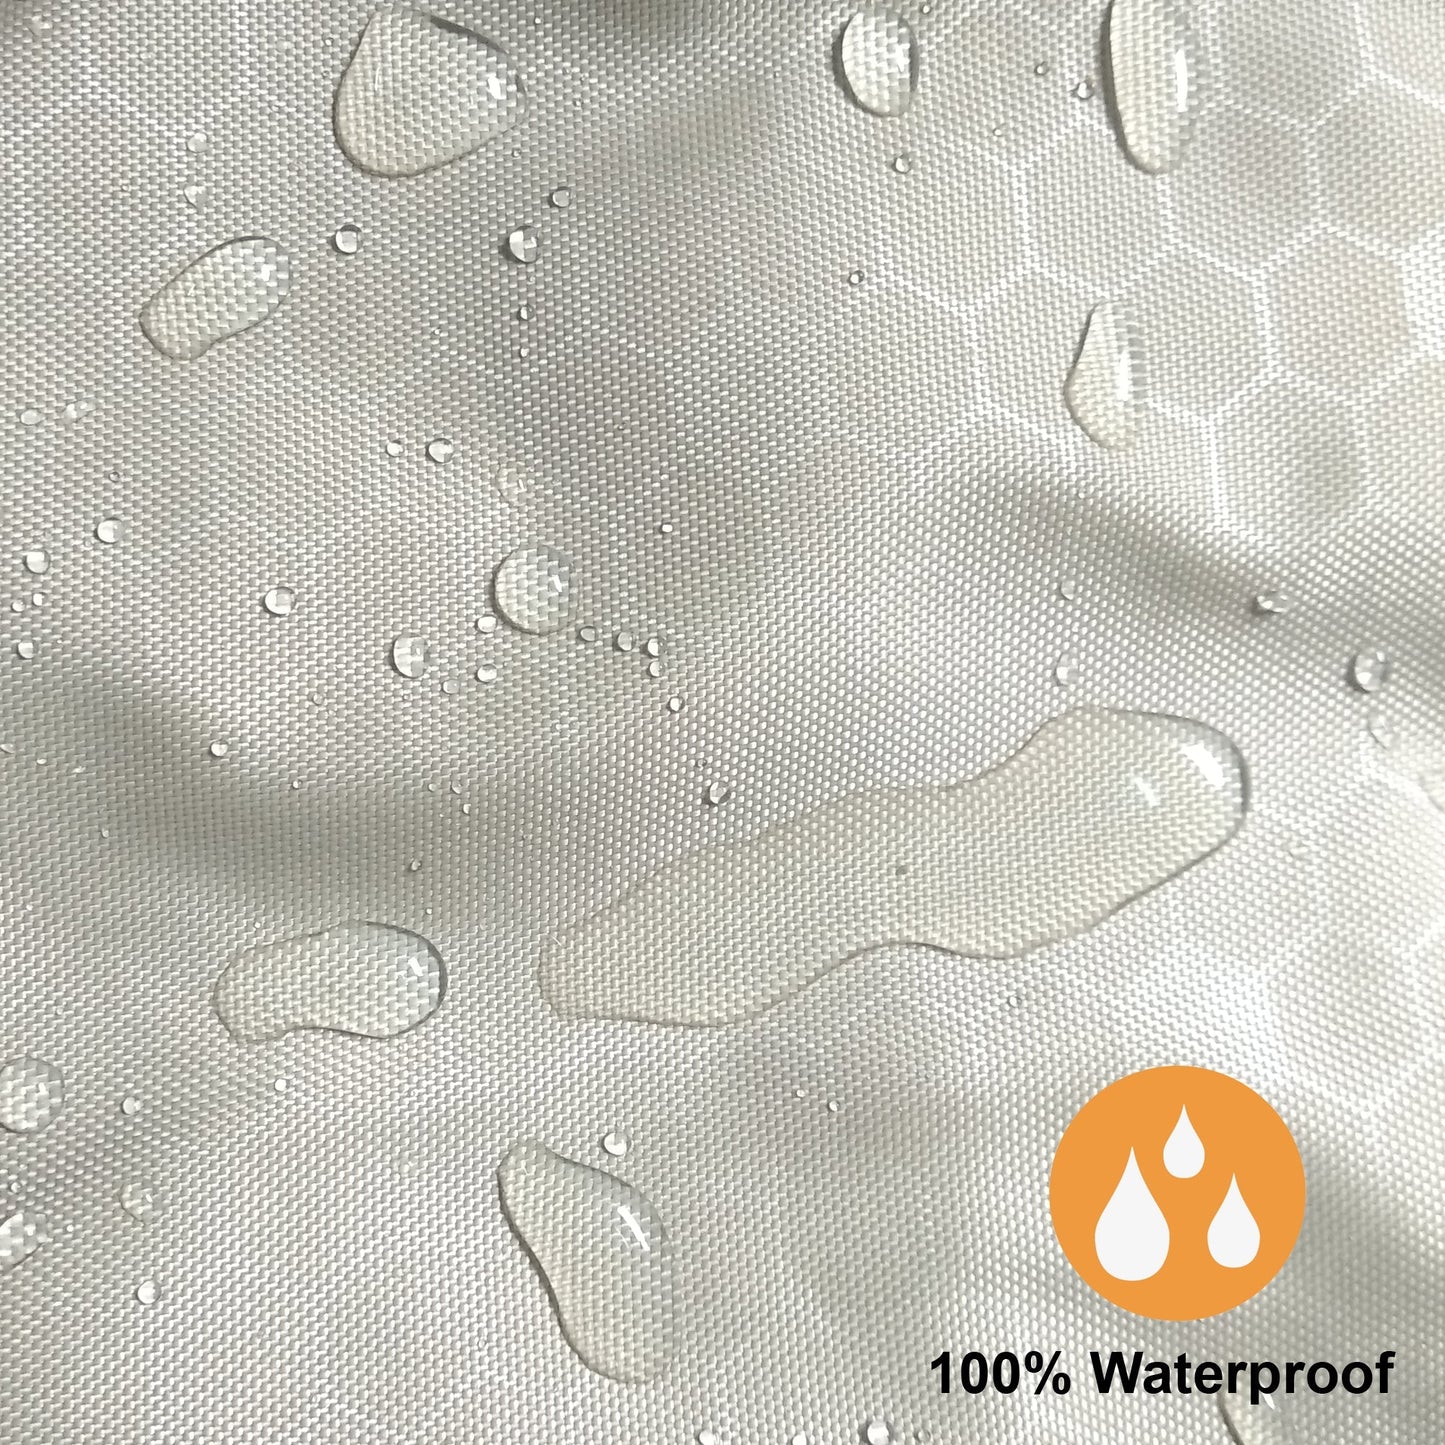 Oshotto Brown 100% Waterproof Car Body Cover with Mirror Pockets For Maruti Suzuki Sx4